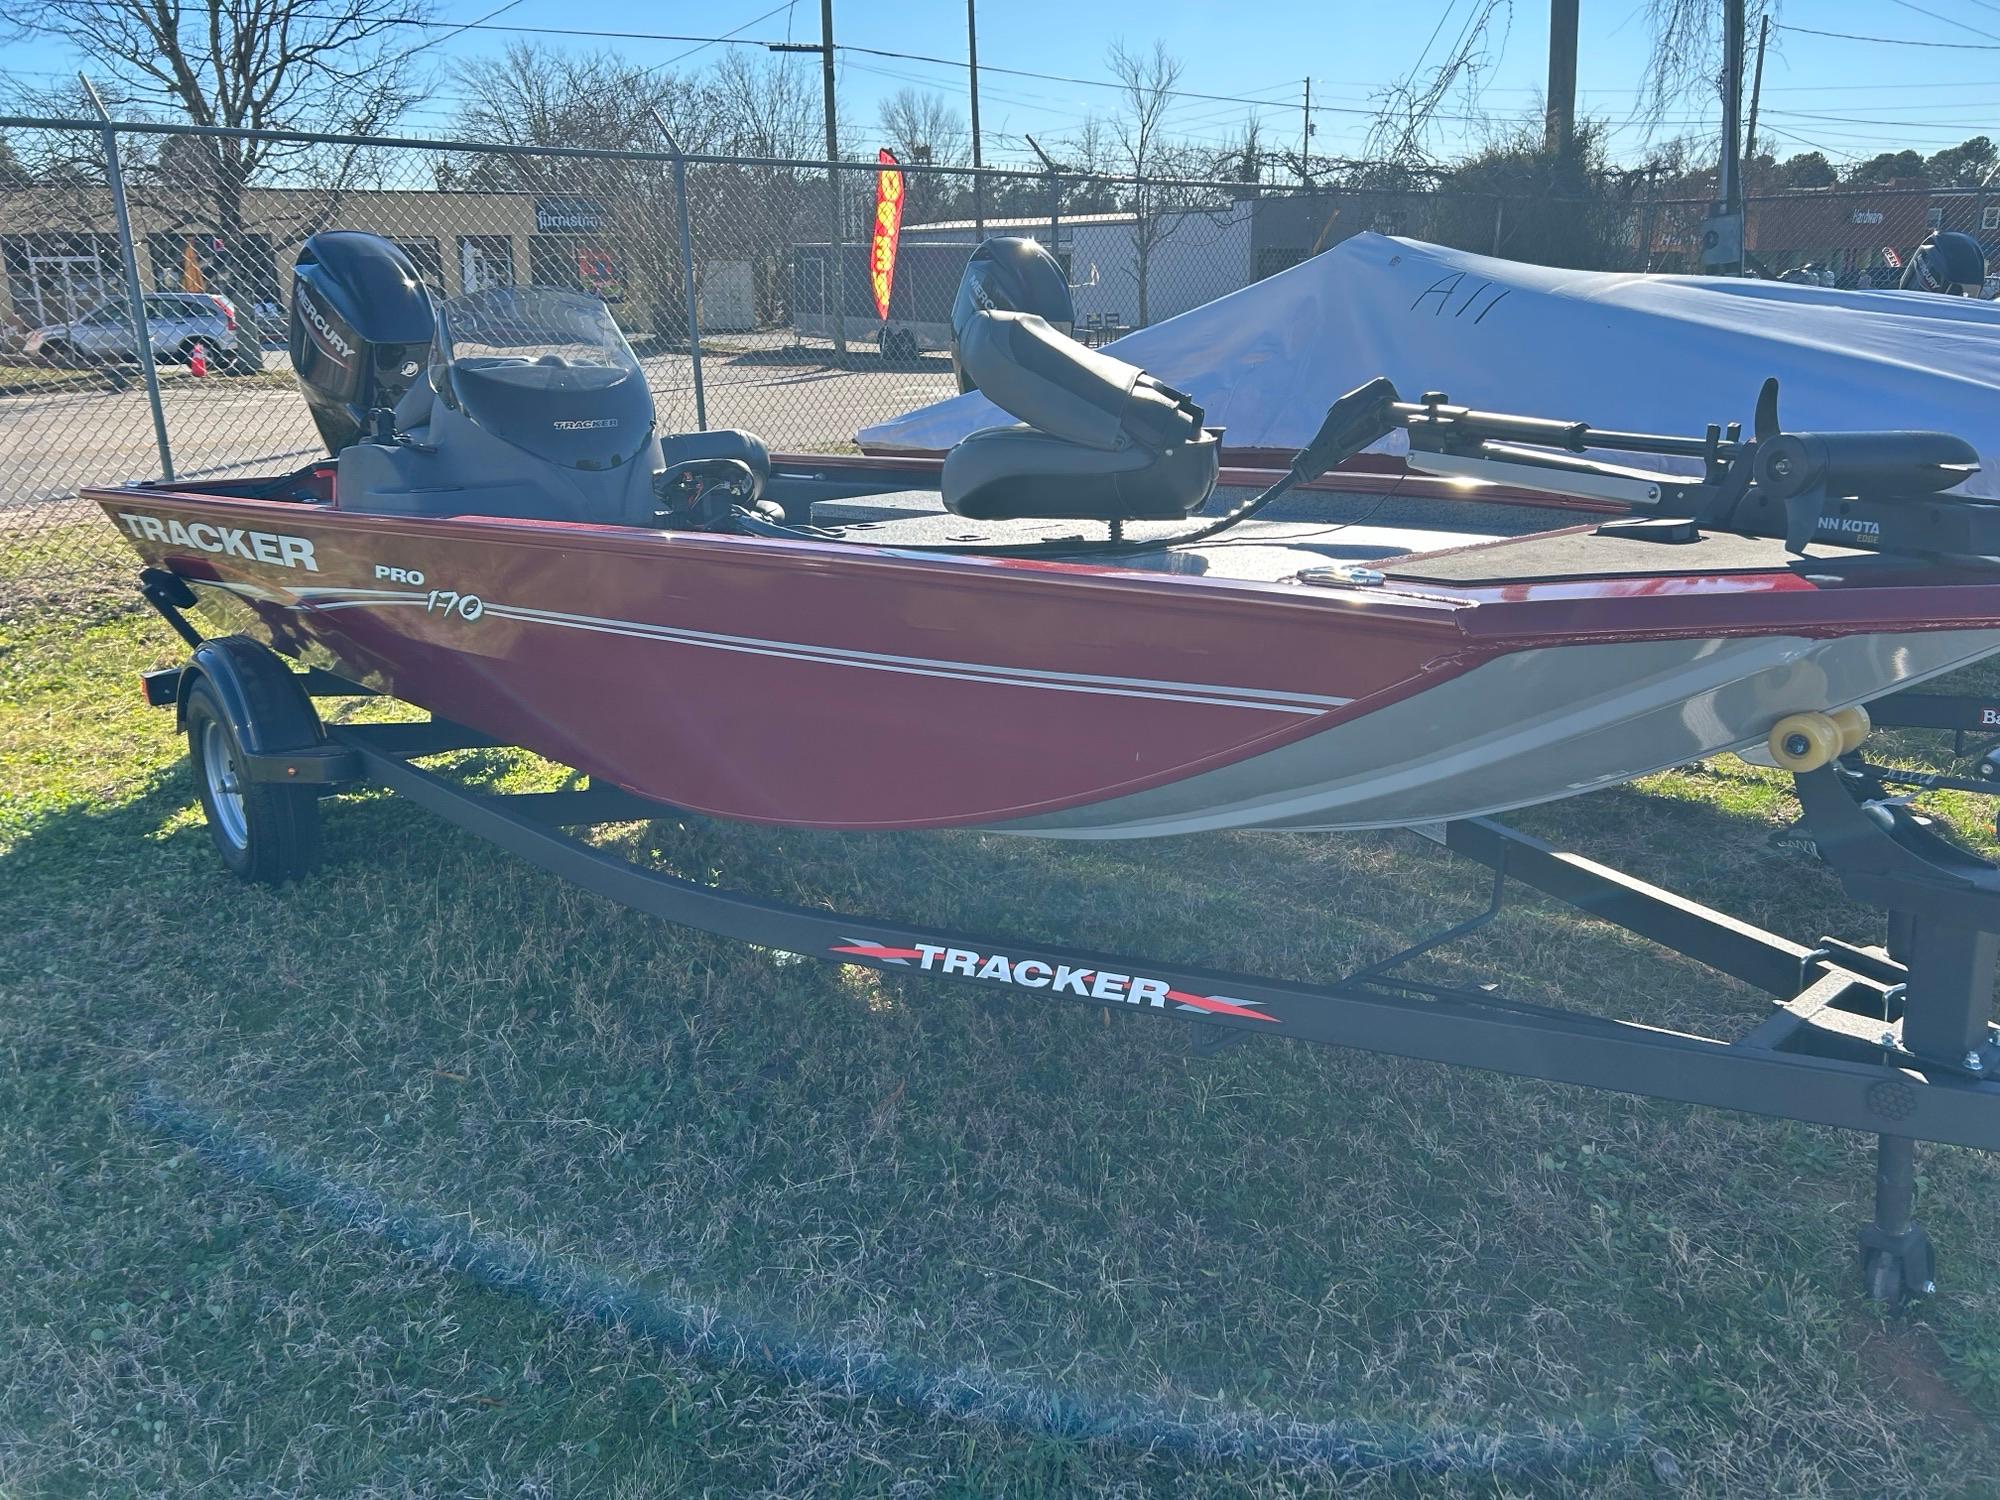 Tracker Pro 170 boats for sale in North Carolina - Boat Trader